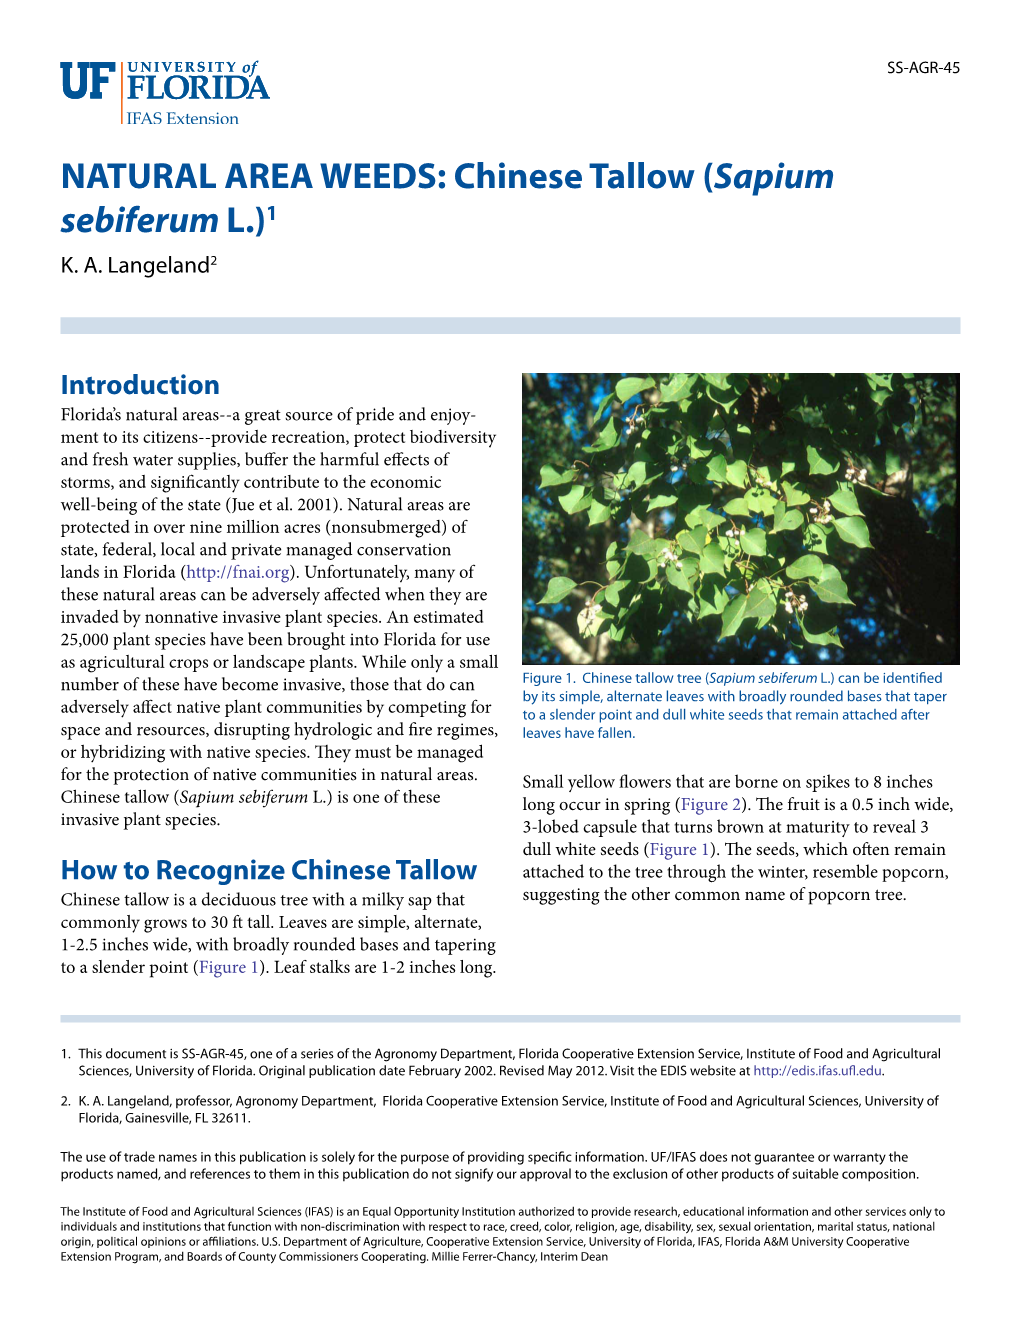 Chinese Tallow (Sapium Sebiferum L.)1 K